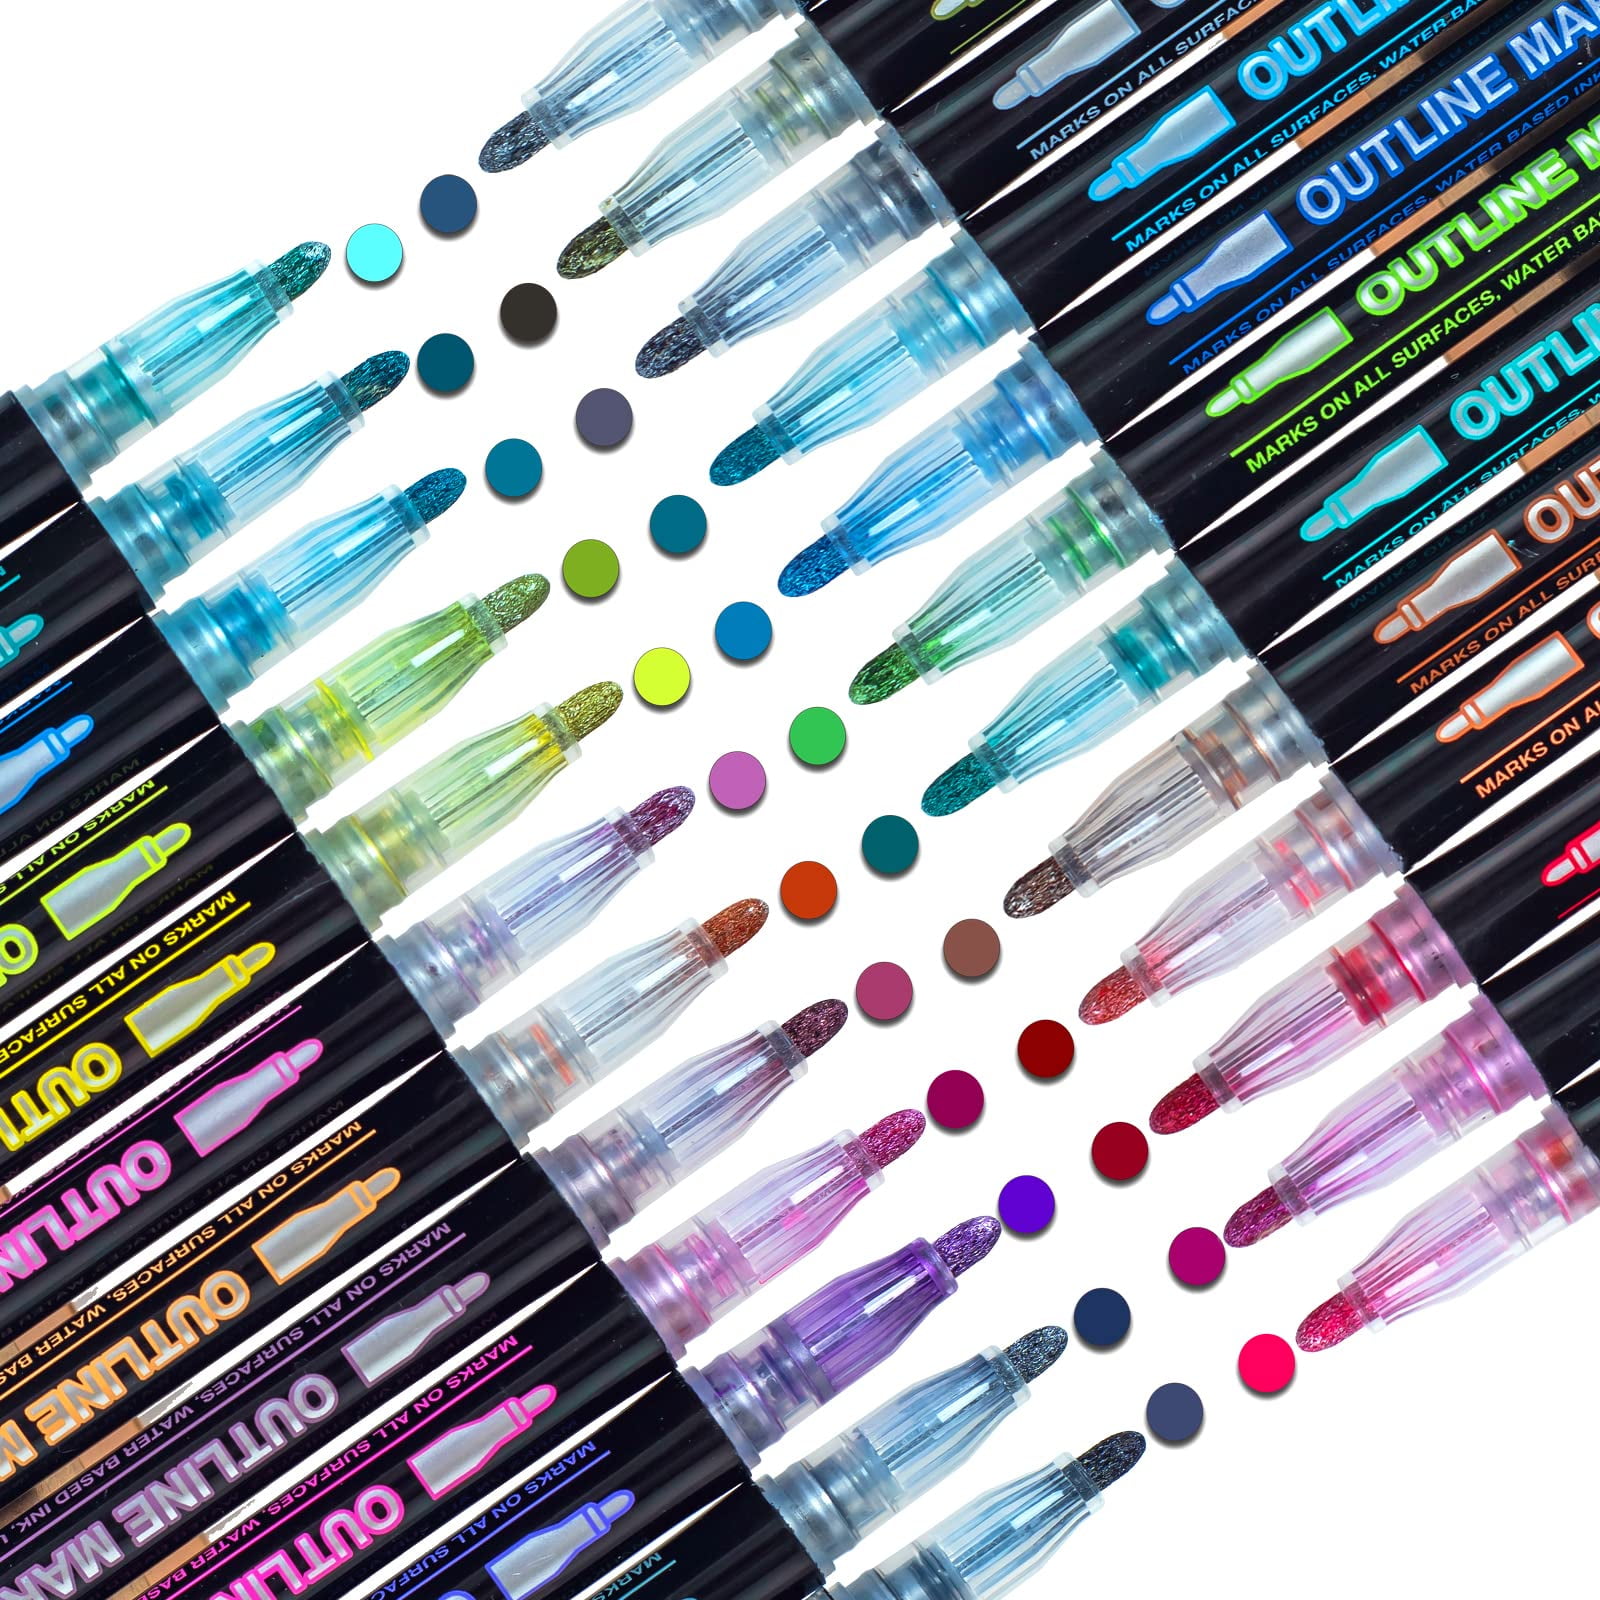  Banral Double Line Outline Markers, 12 Colors Super Squiggles  Shimmer Outline Marker Set, Self Outline Metallic Glitter Doodle Drawing  Markers Pens for Christmas Greeting Card Making, DIY Art Crafts : Sports